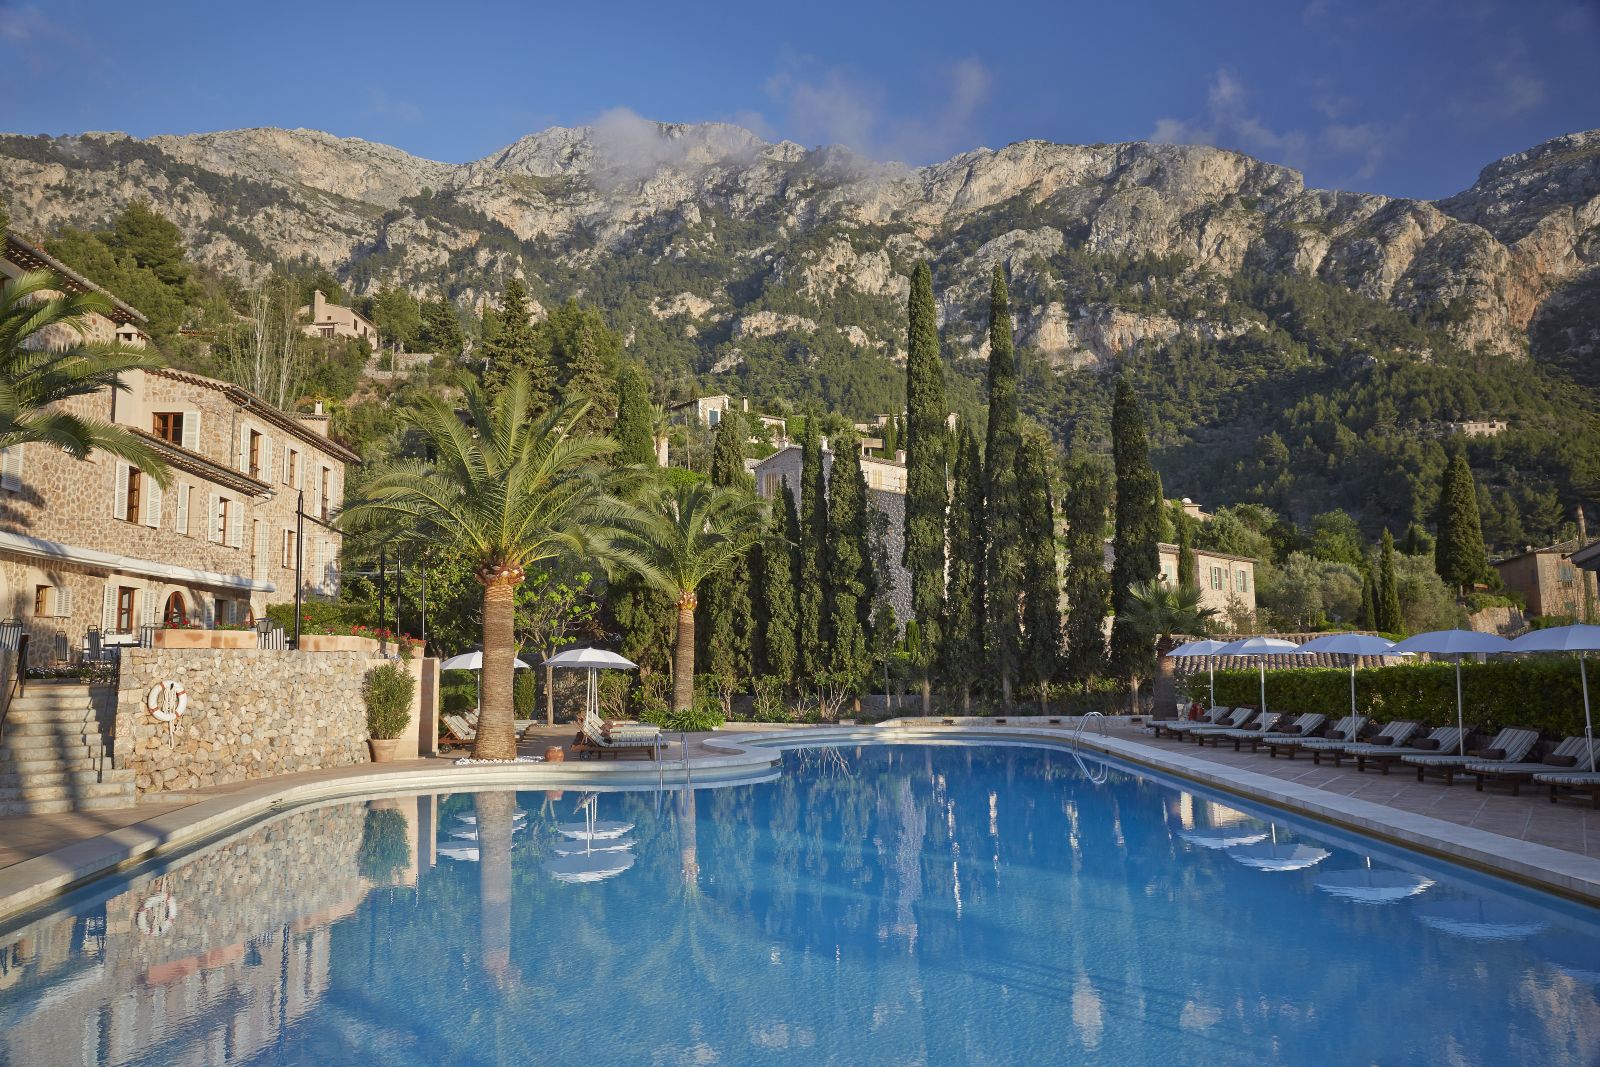 Swimming pool with mountain backdrop at Belmond La Residencia hotel in Mallorca